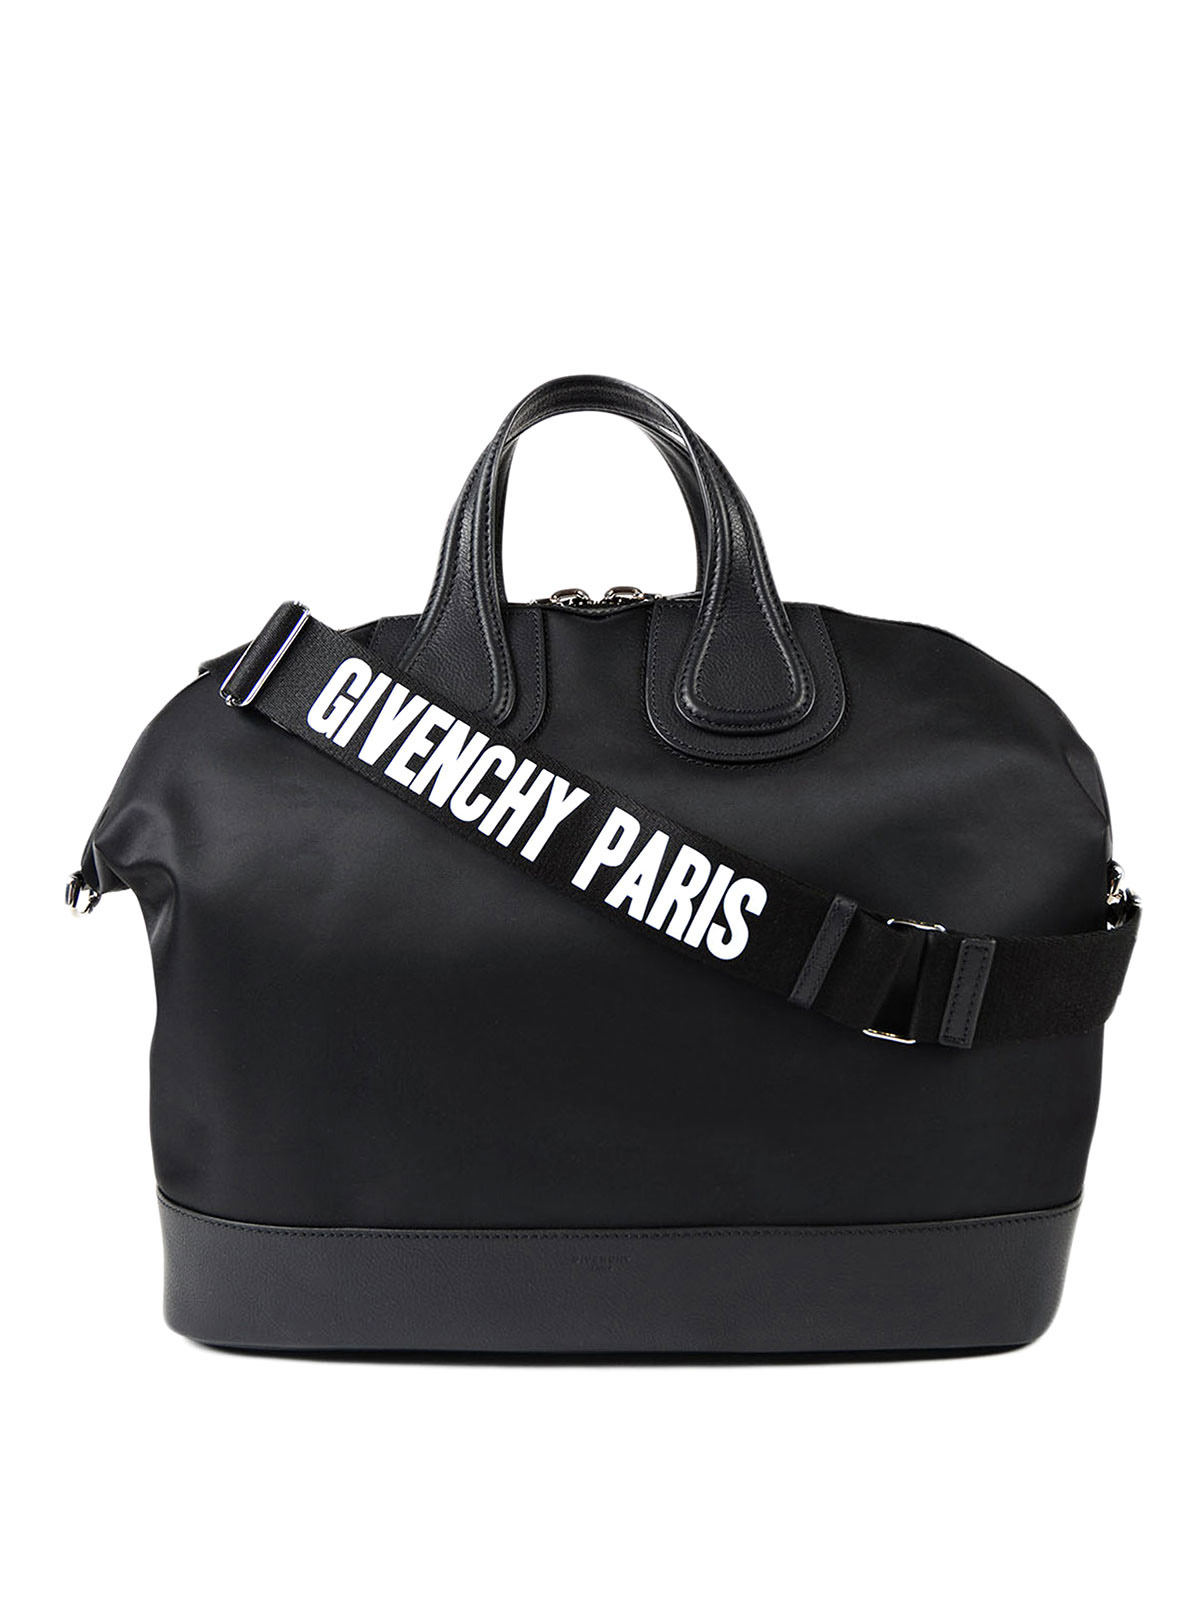 Luggage & Travel bags Givenchy - Nightingale duffle bag 